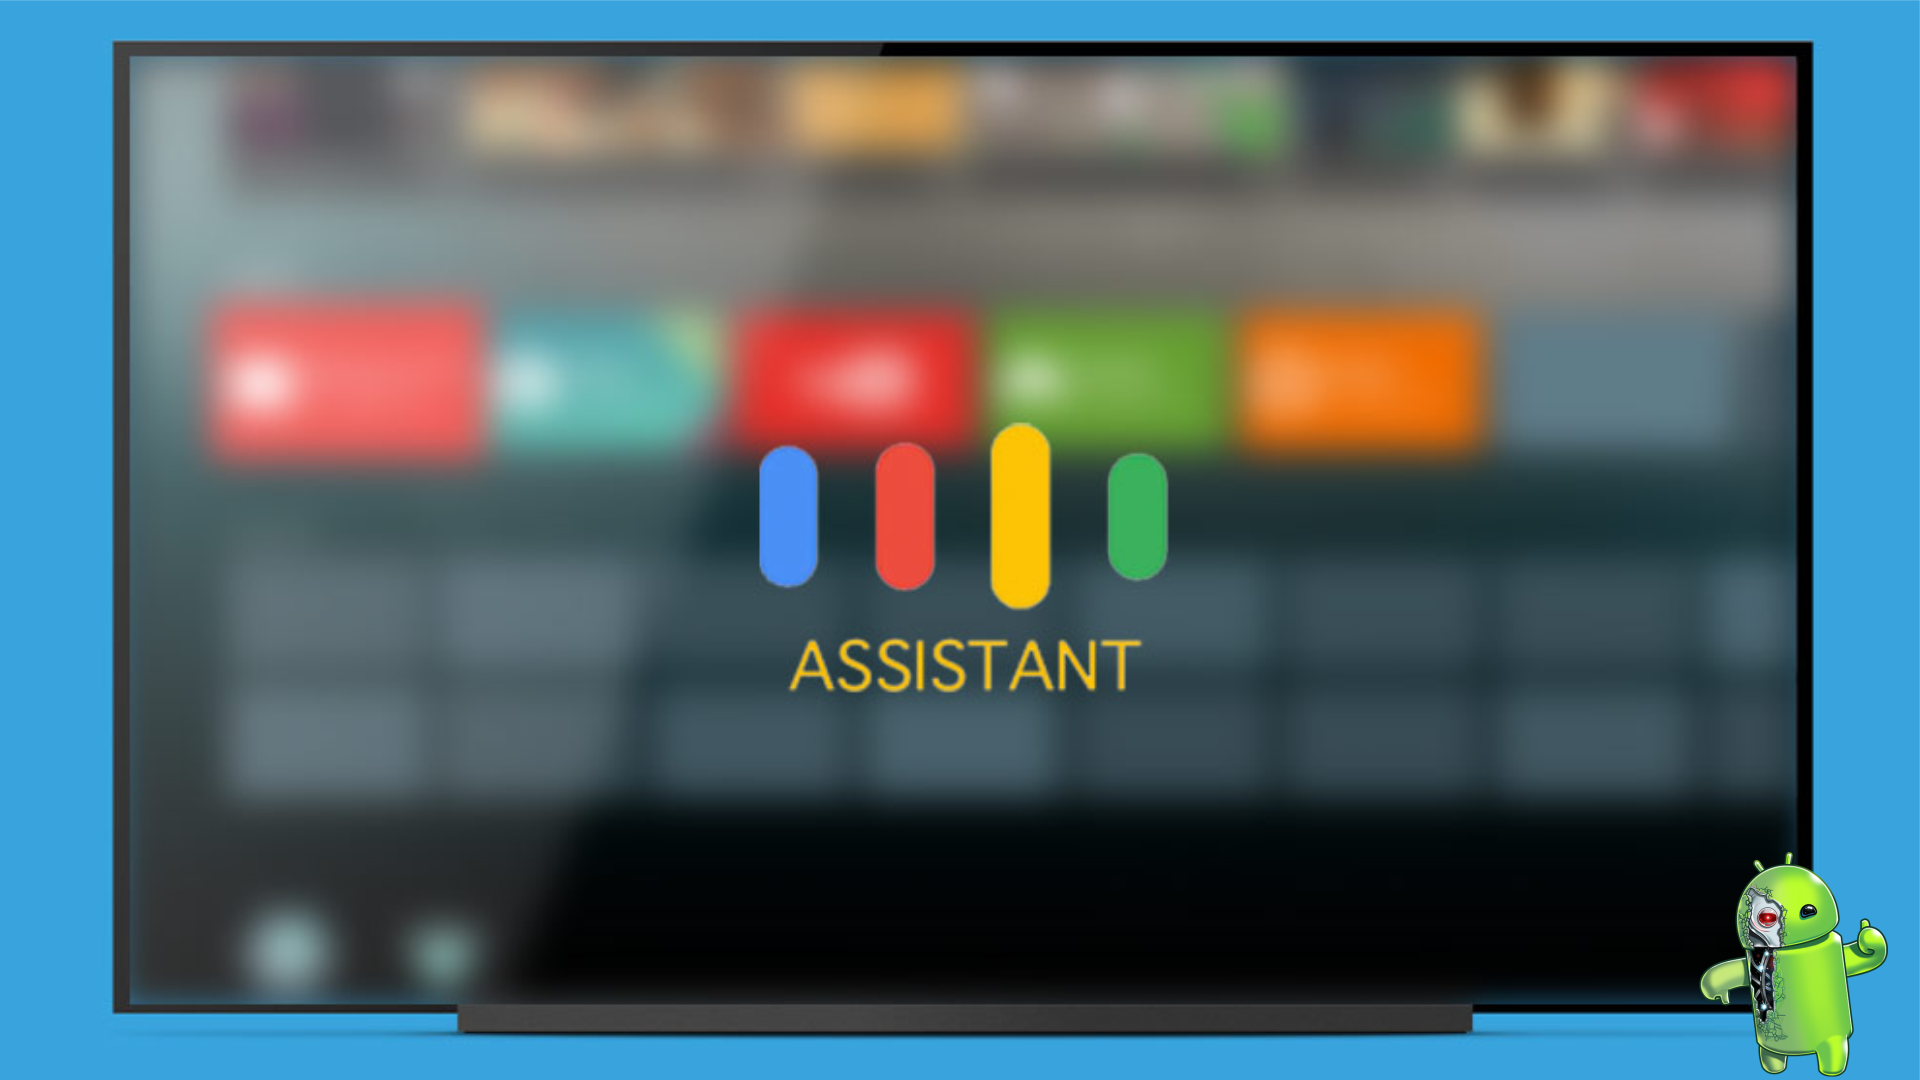 Google ассистент телевизор. Android TV голосовой ассистент. Google TV телевизор. Google Assistant Android TV. TV Assistant для смарт ТВ.